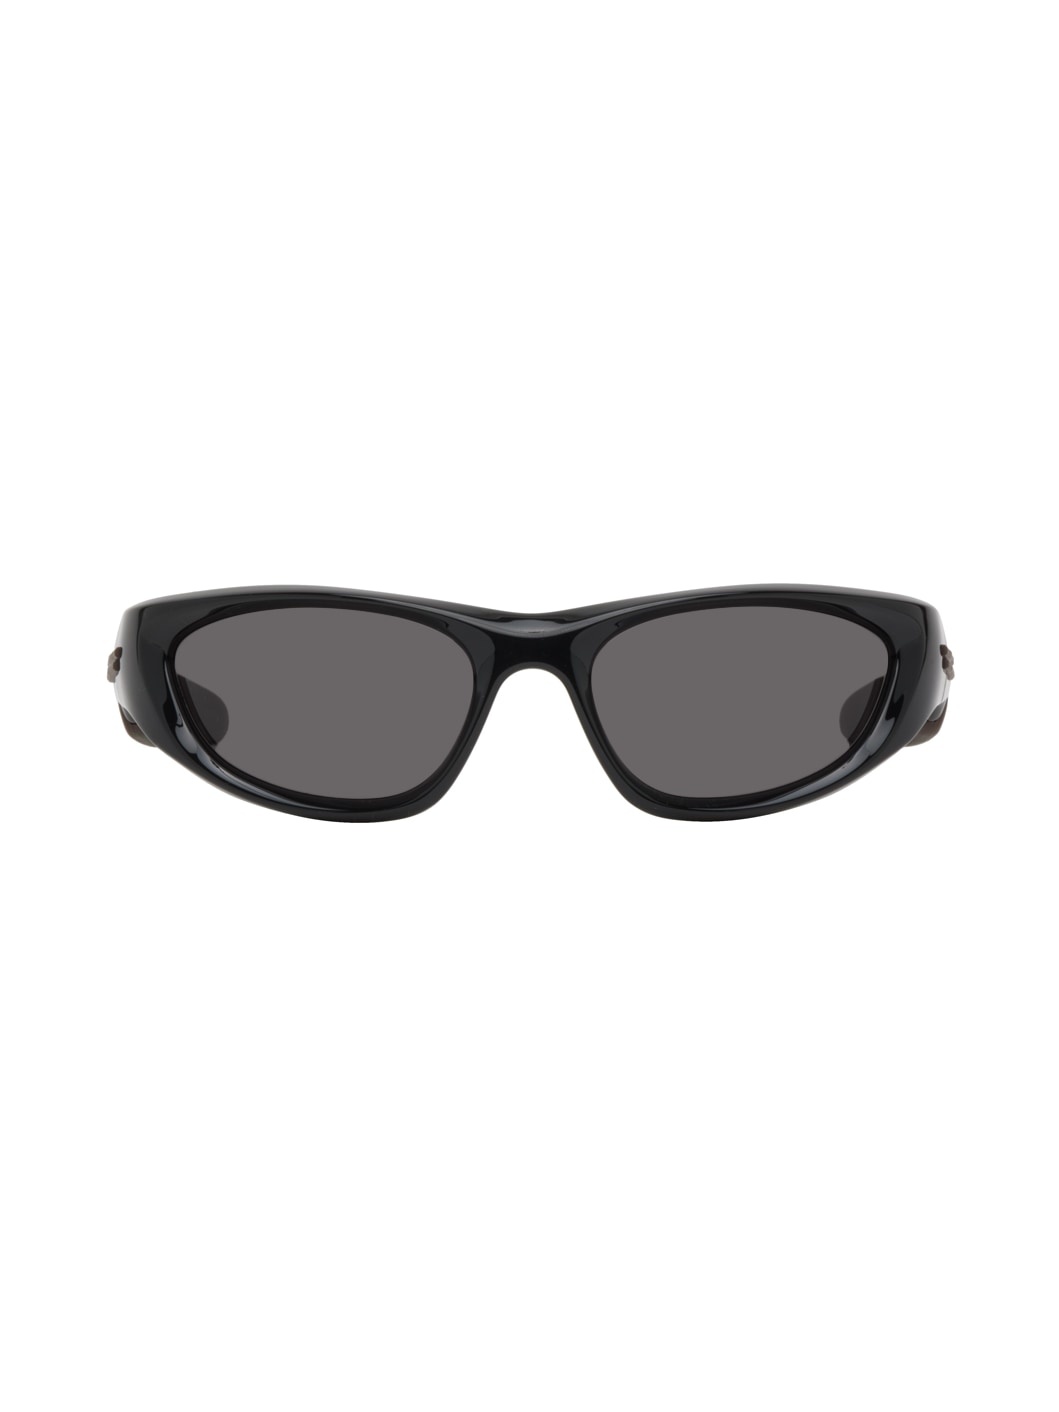 Black Cone Wraparound Sunglasses - 1